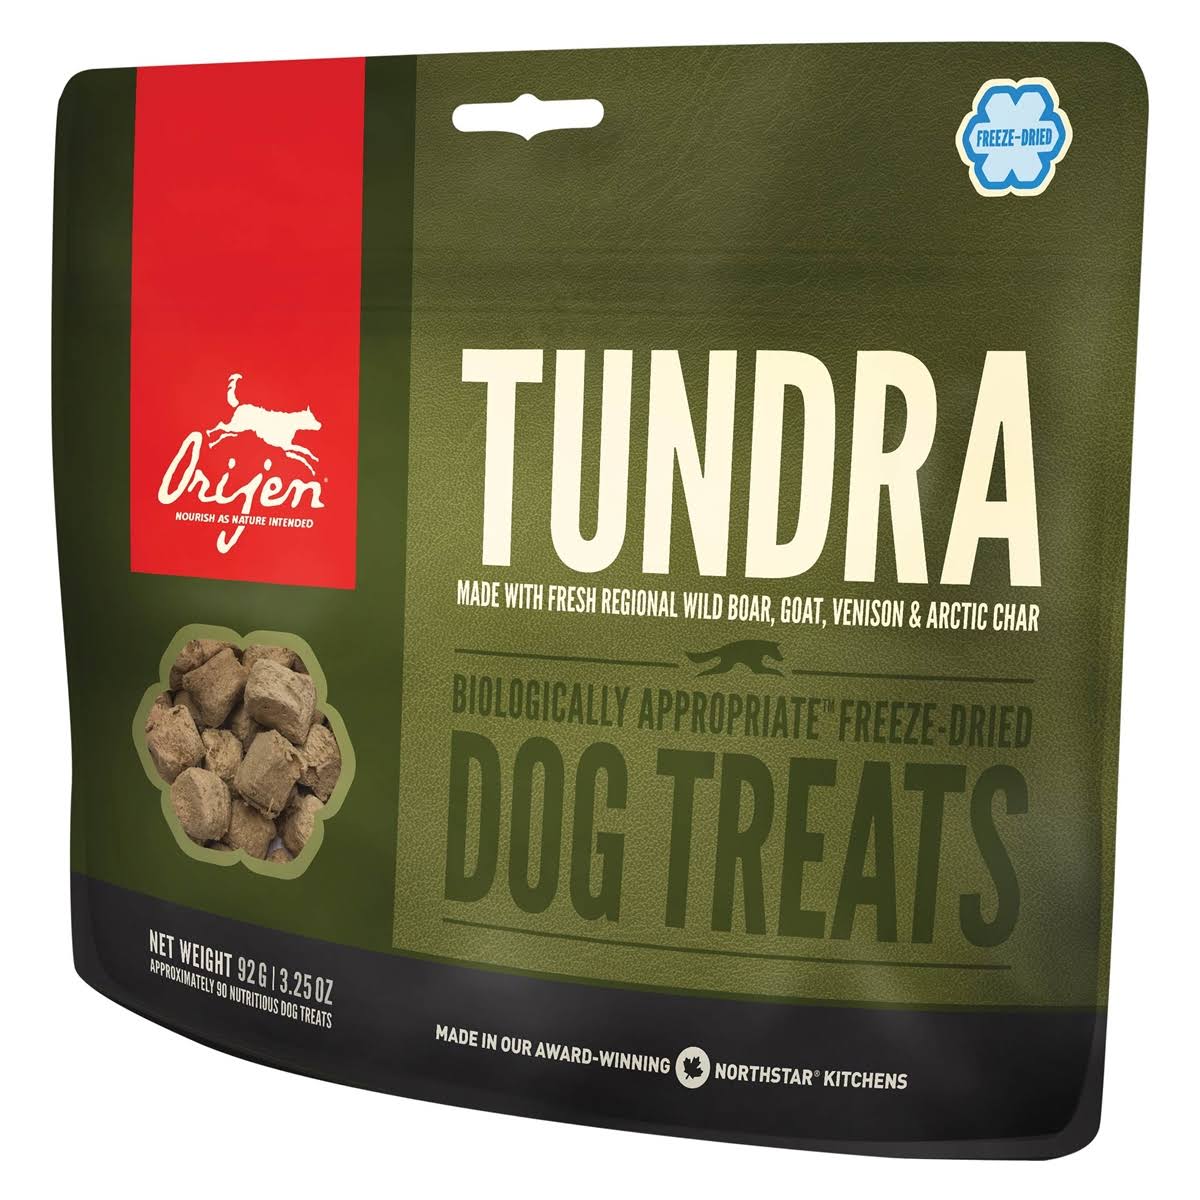 Orijen Tundra Dog Treats - 92g